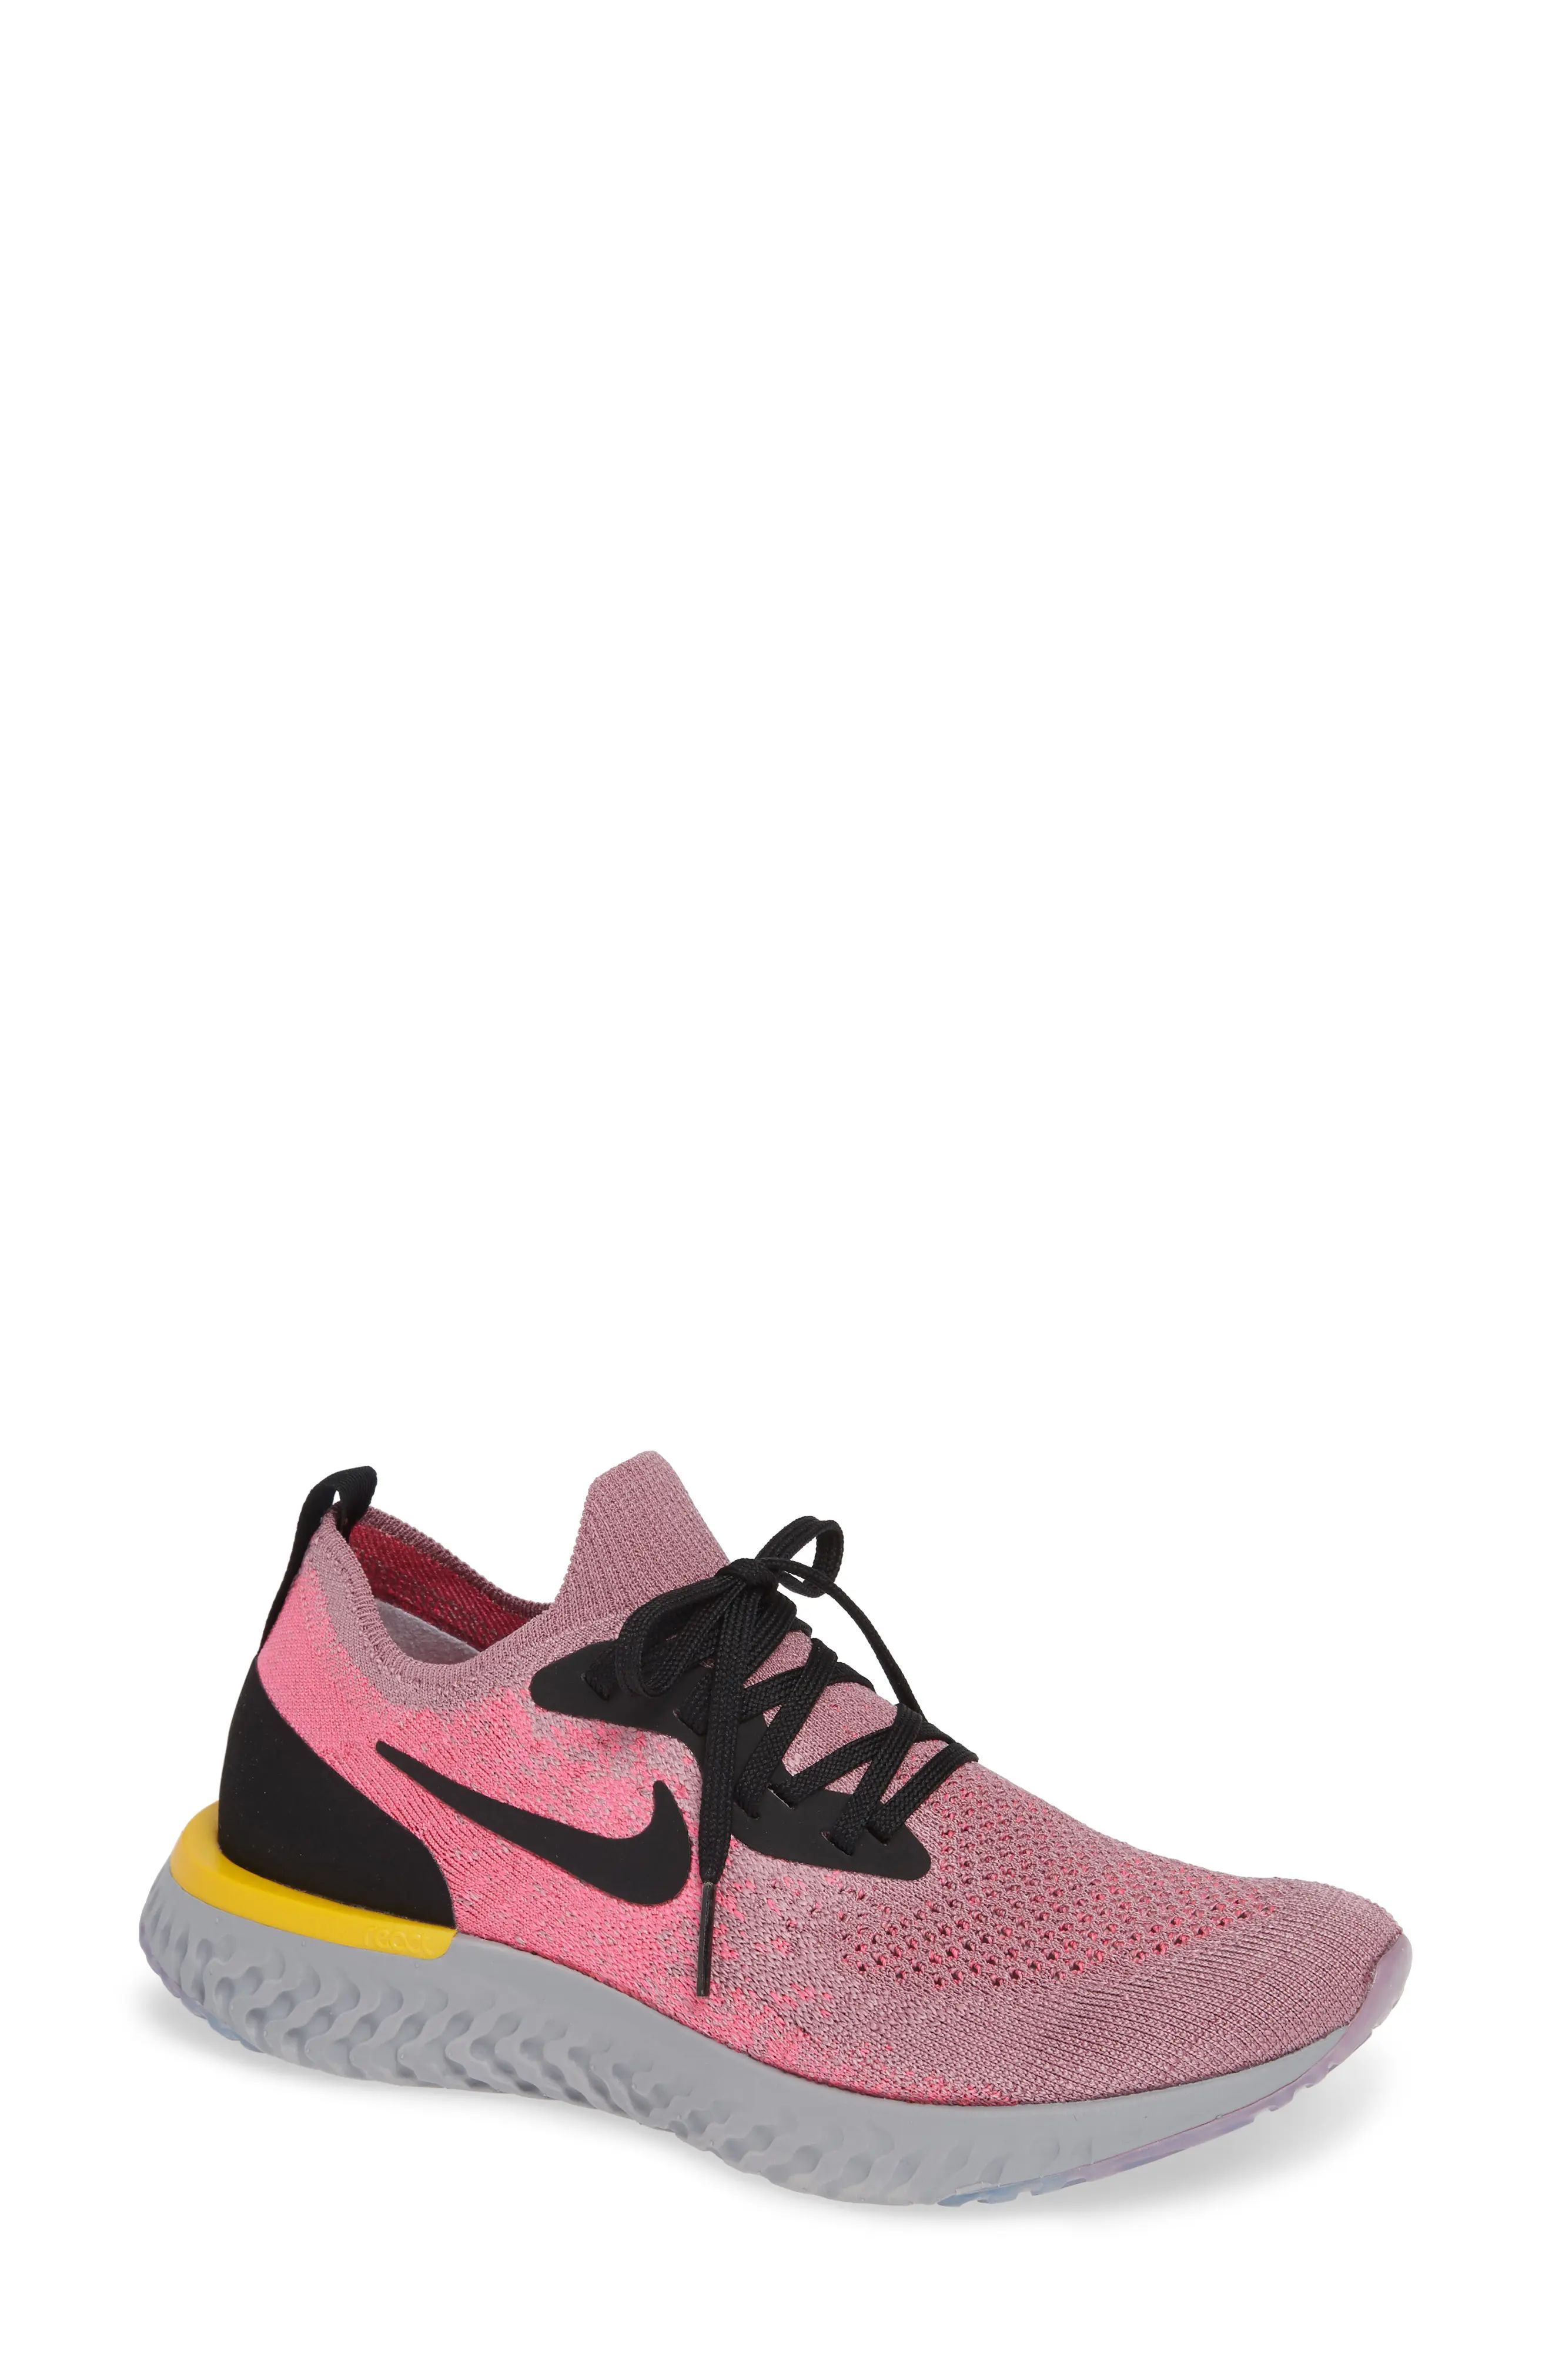 Women's Nike Epic React Flyknit Running Shoe | Nordstrom